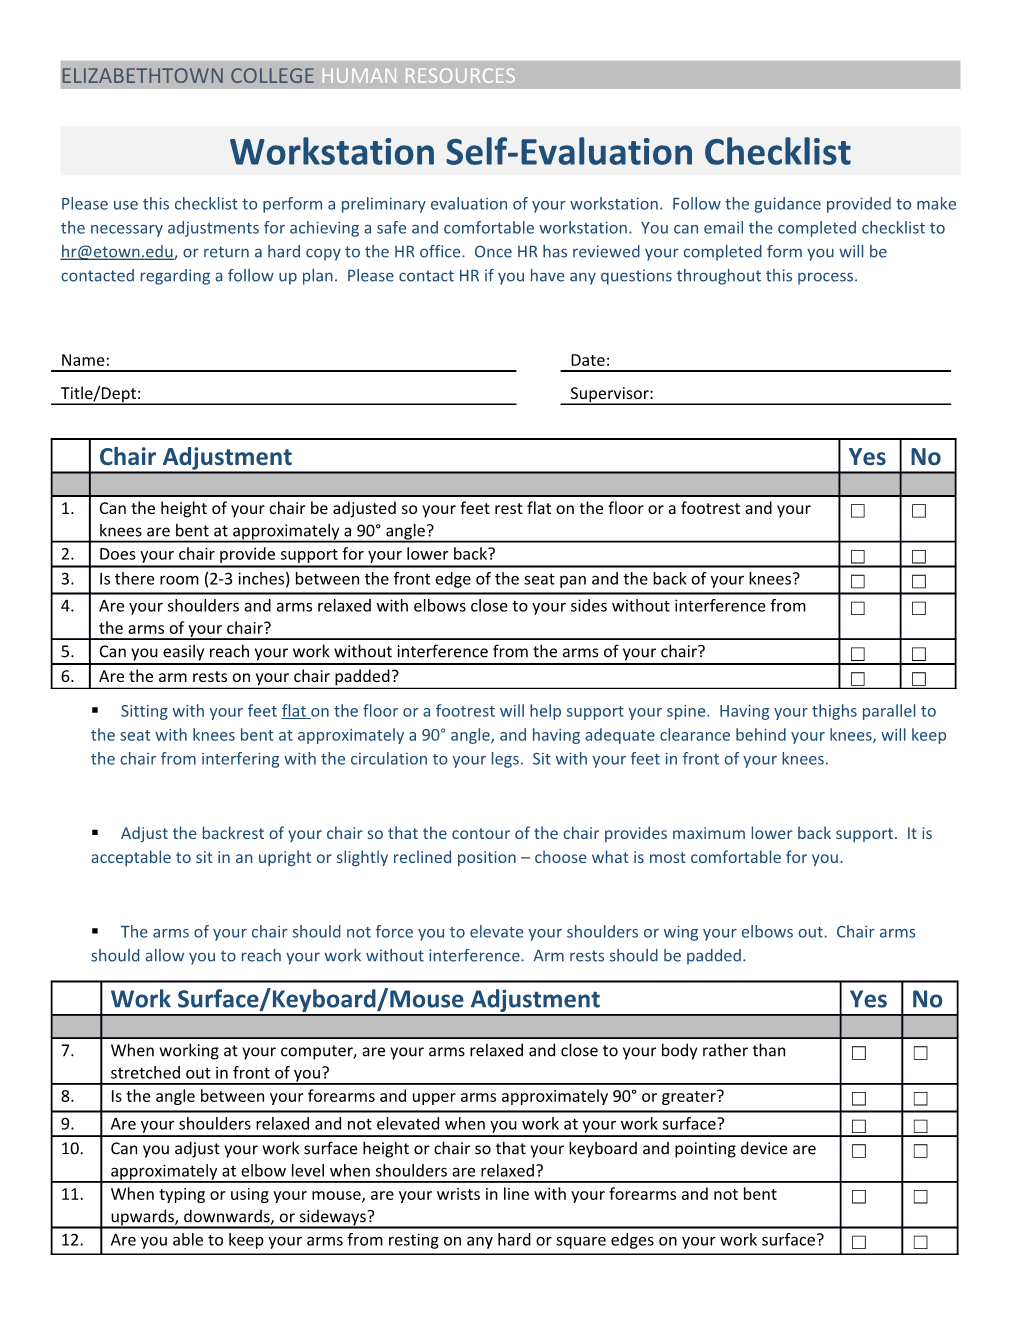 Workstation Self-Evaluation Checklist